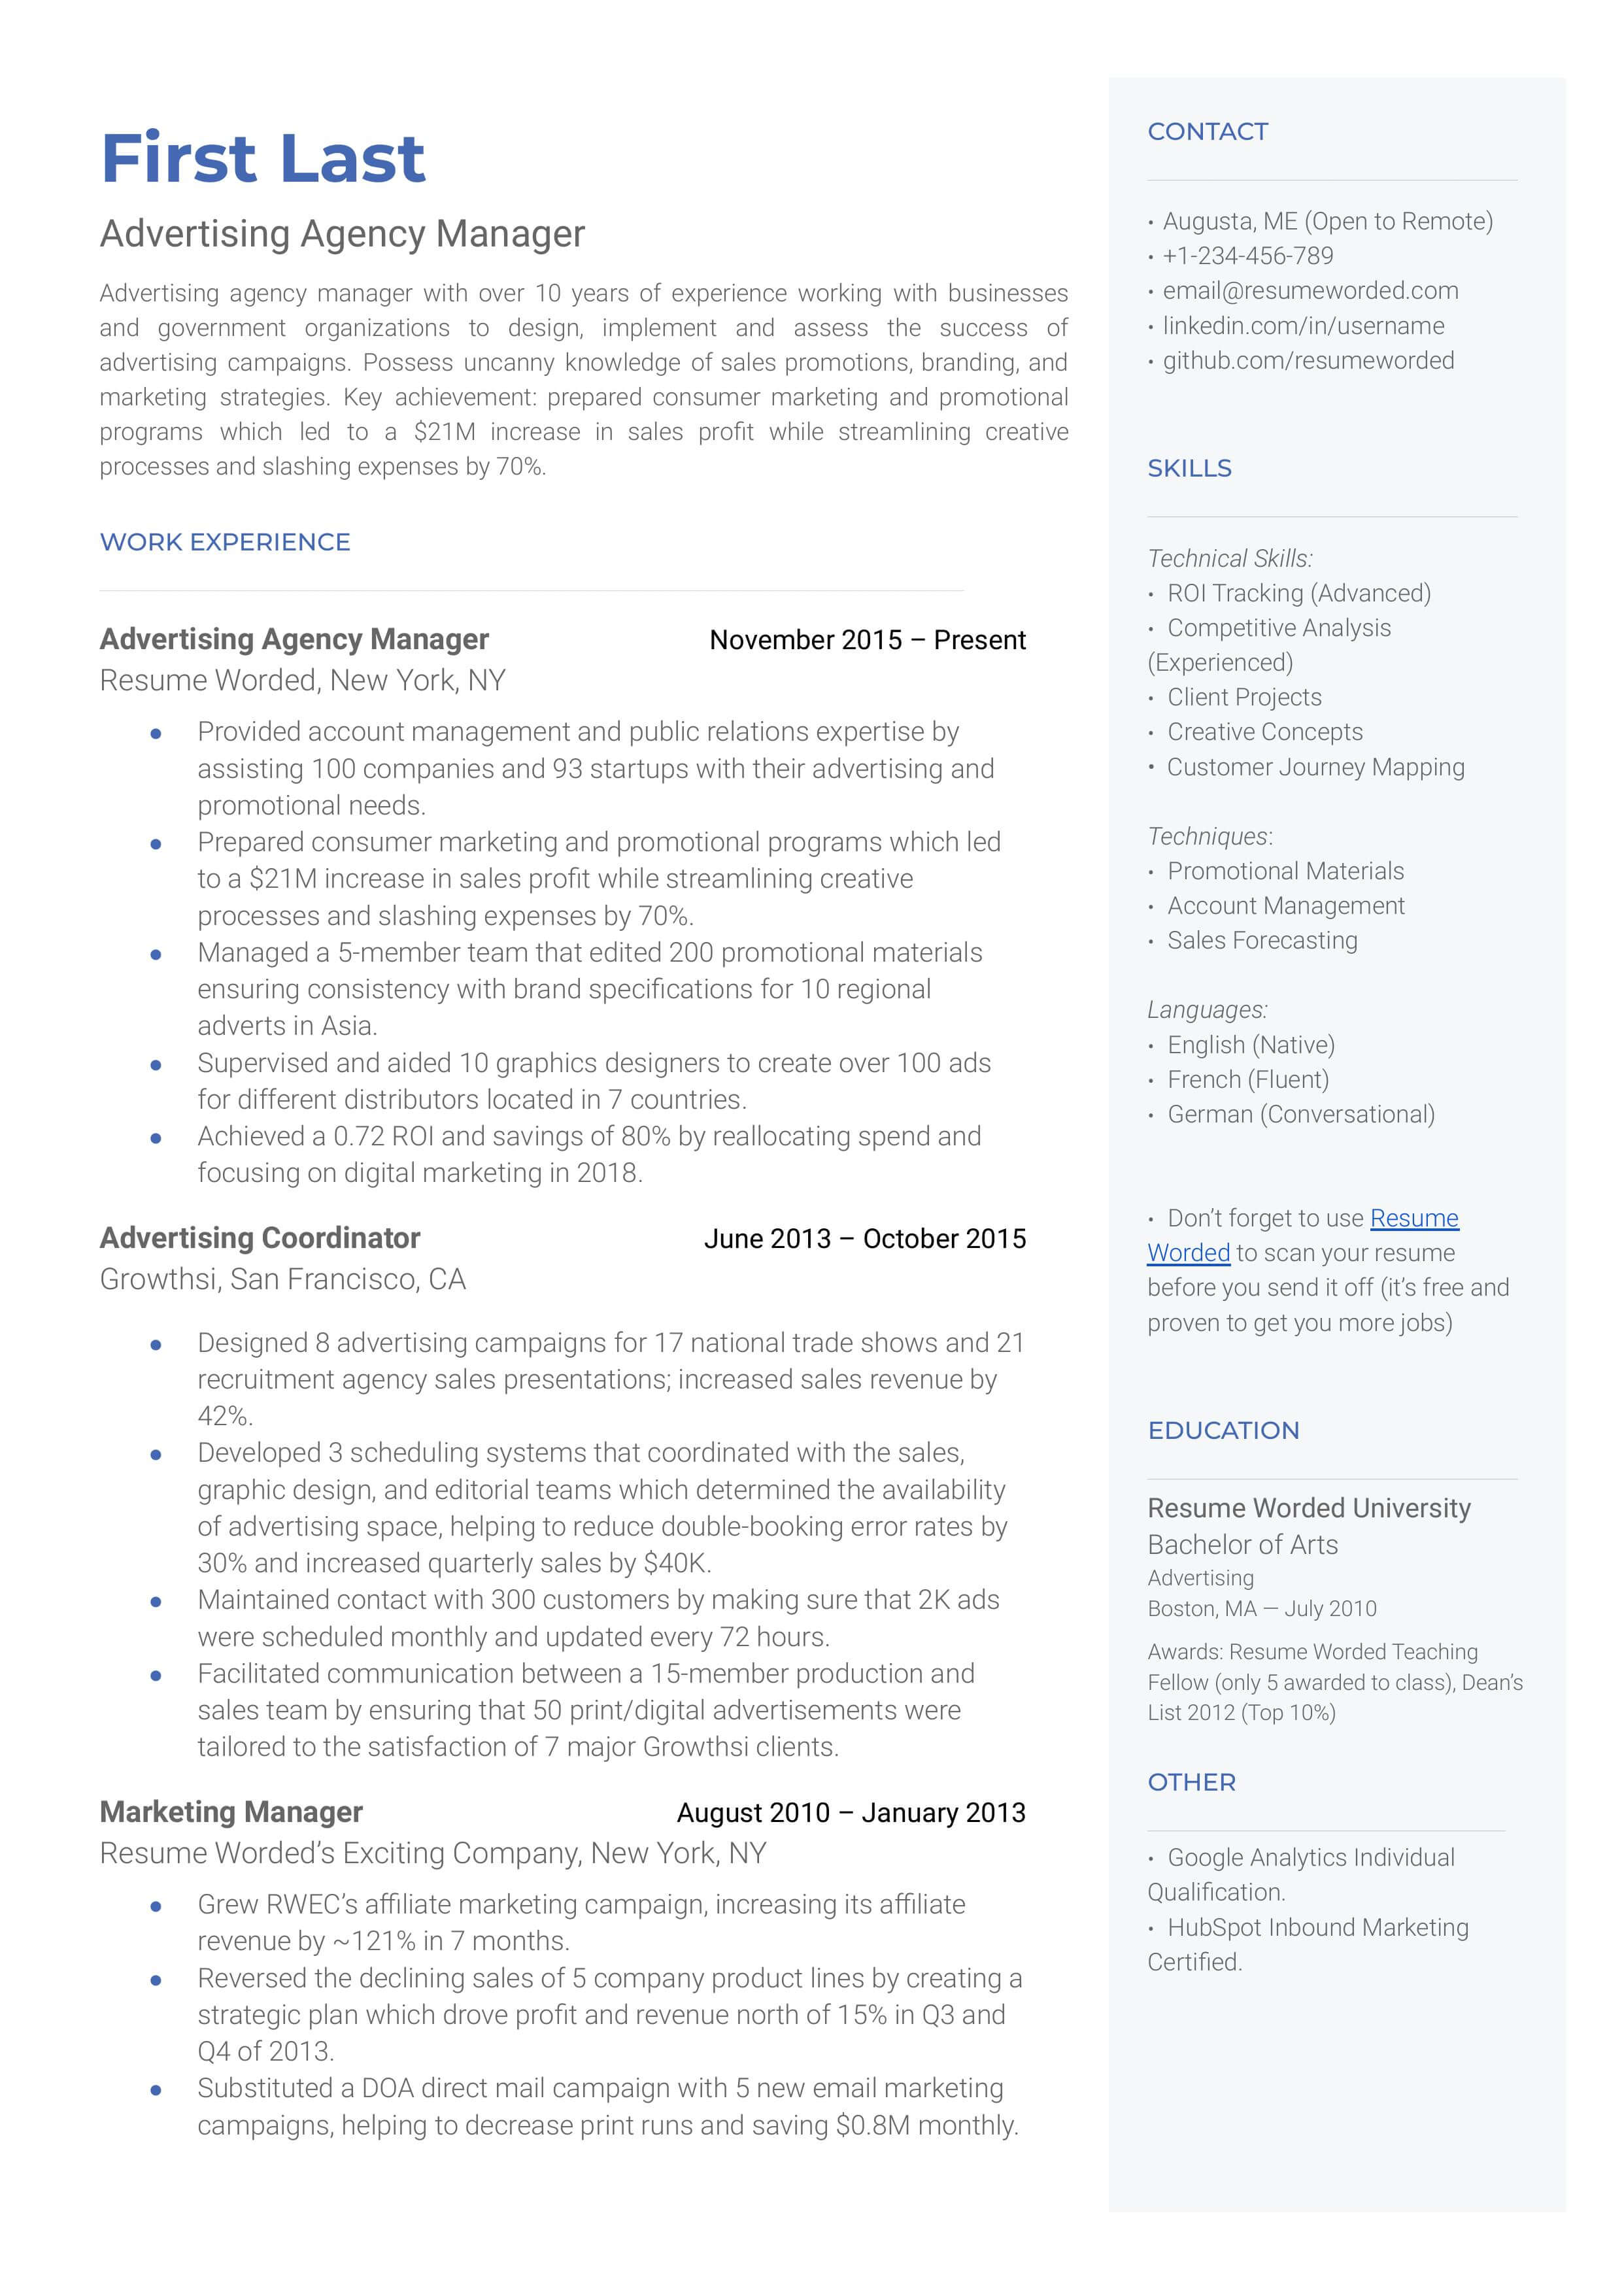 A CV screenshot highlighting digital advertising skills and leadership experience.